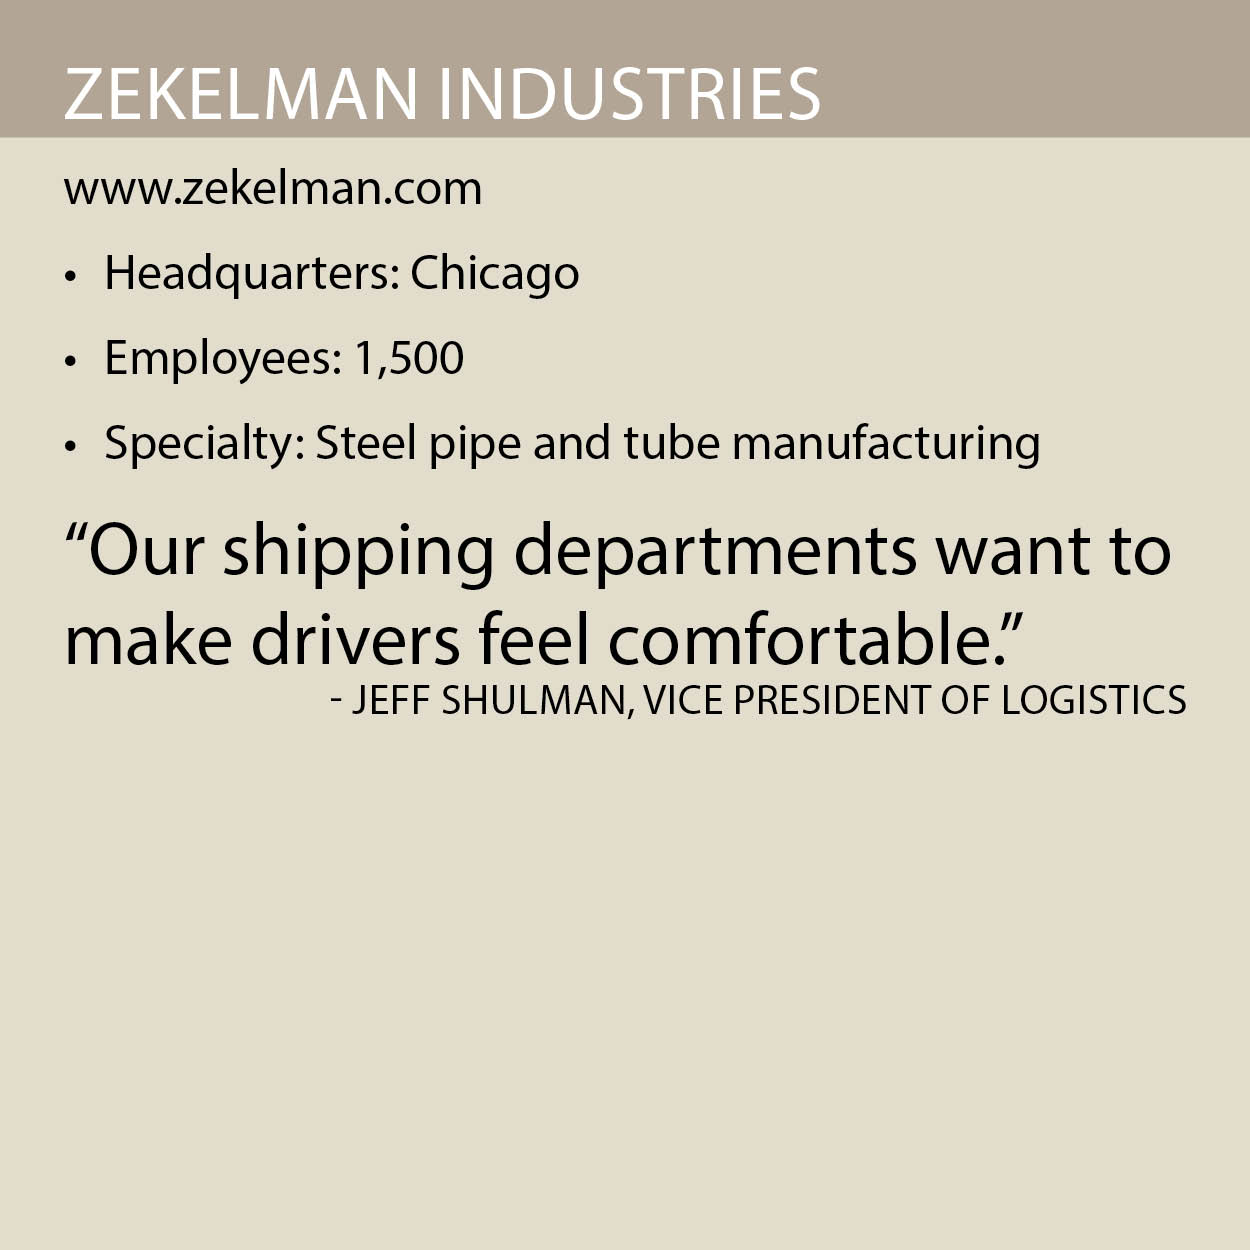 Zekelman Industries fact box